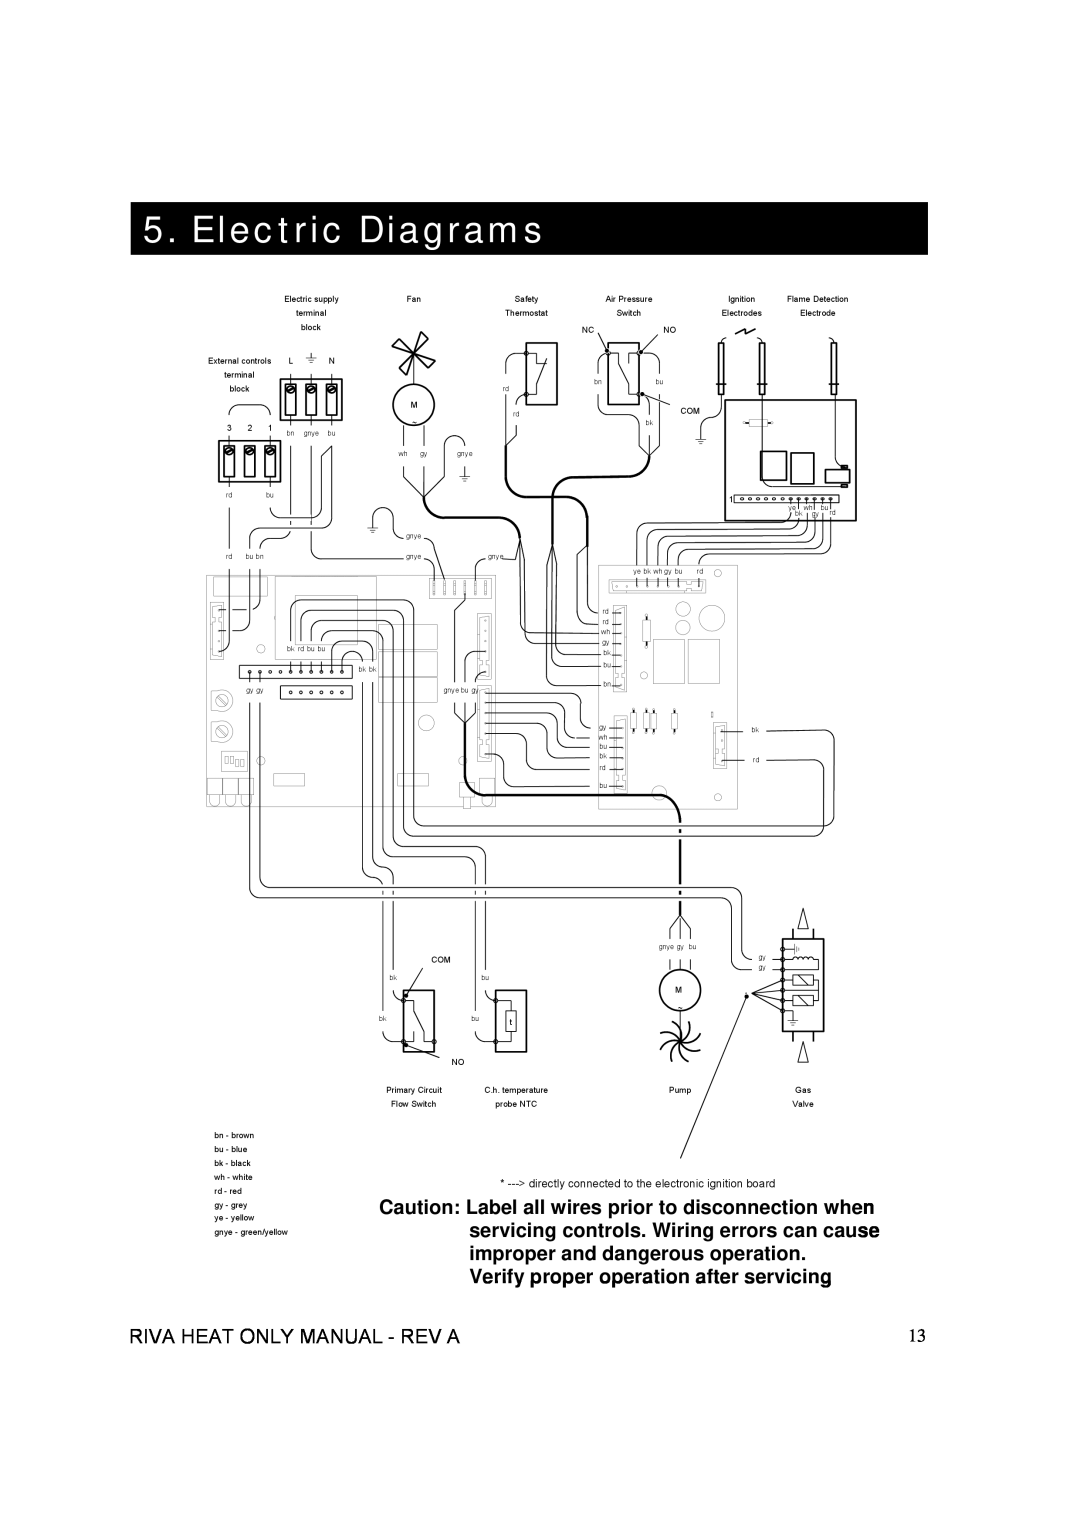 Verona WALL HUNG GAS BOILER manual Electric Diagrams, Verify proper operation after servicing 